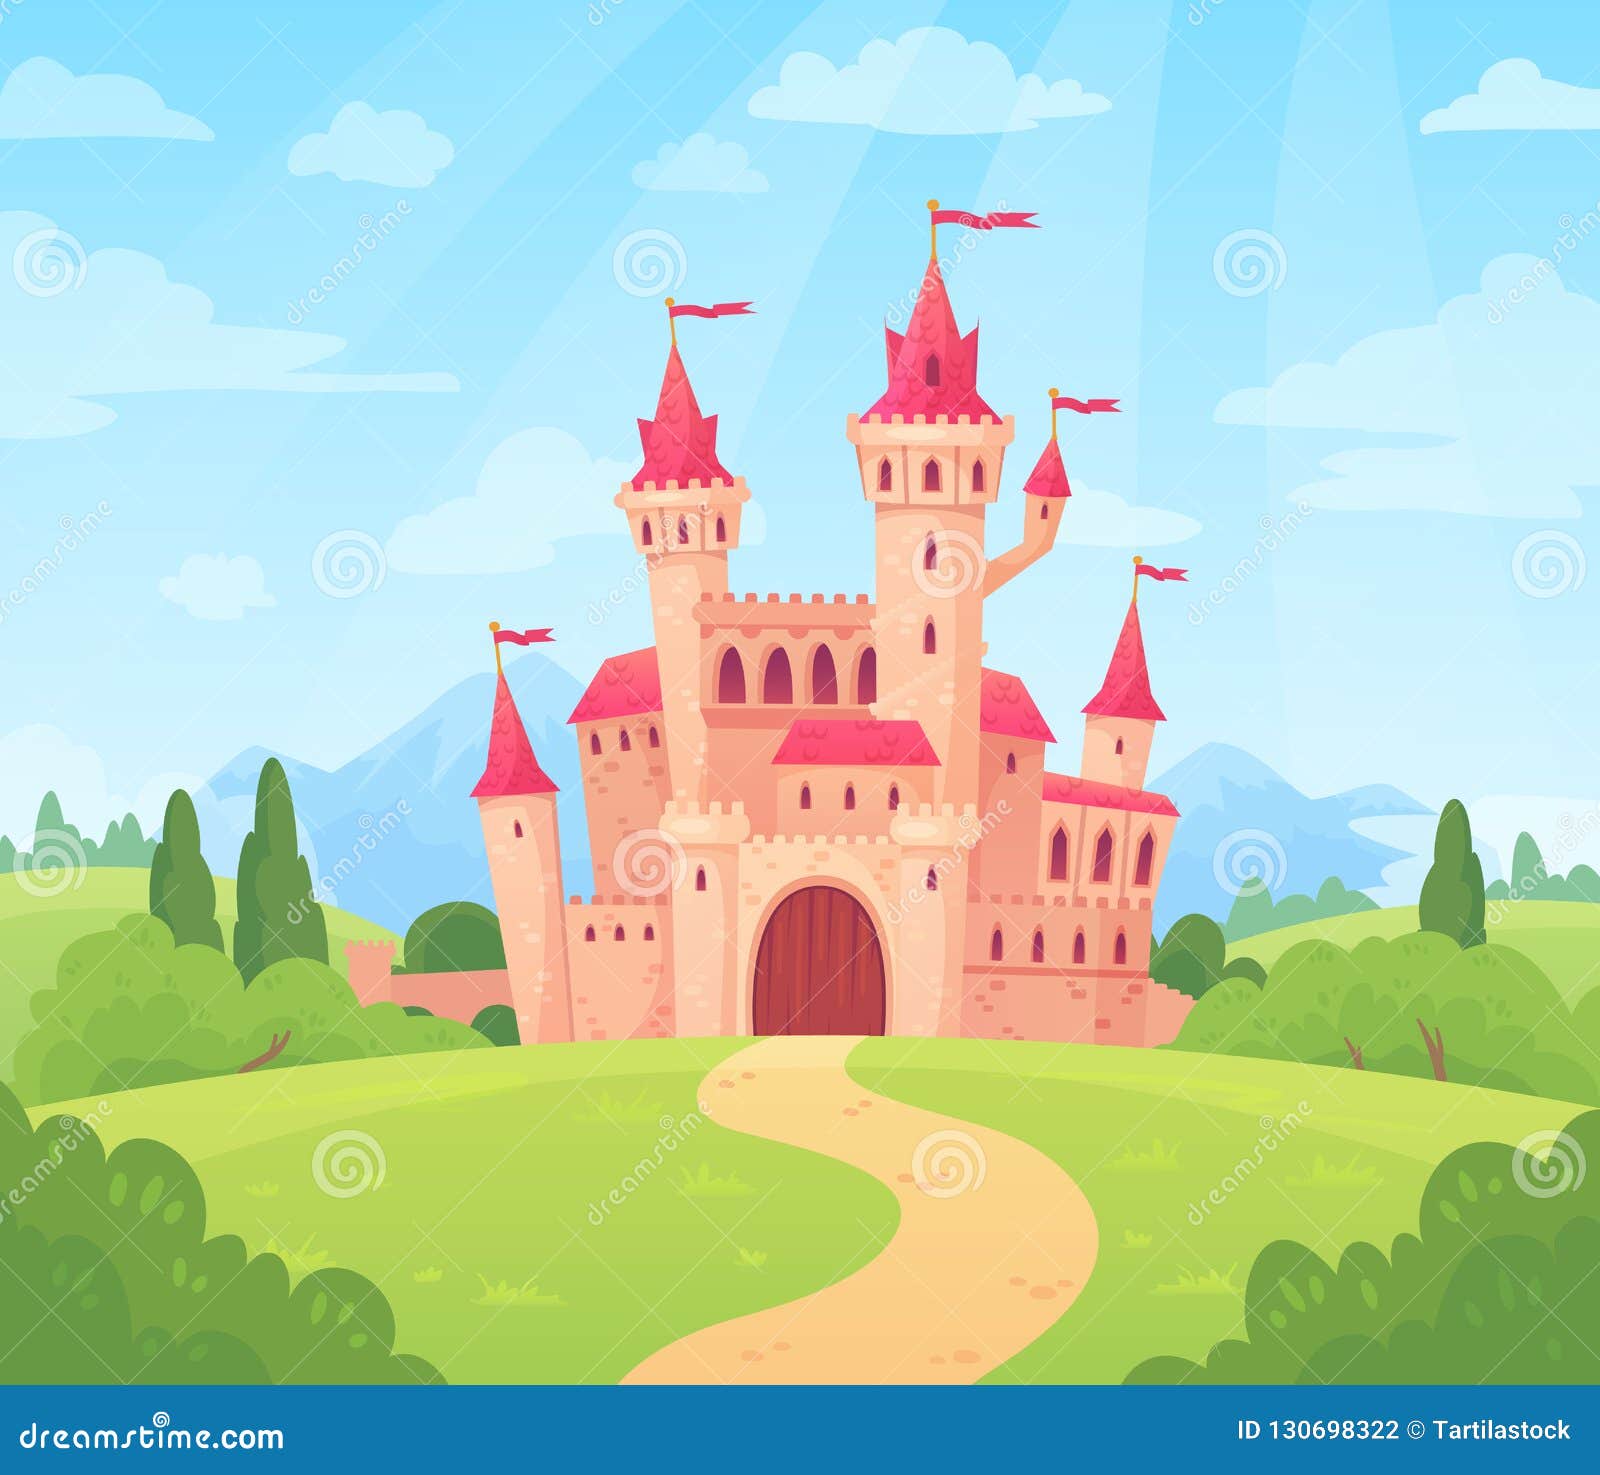 fairytale landscape with castle. fantasy palace tower, fantastic fairy house or magic castles kingdom cartoon 